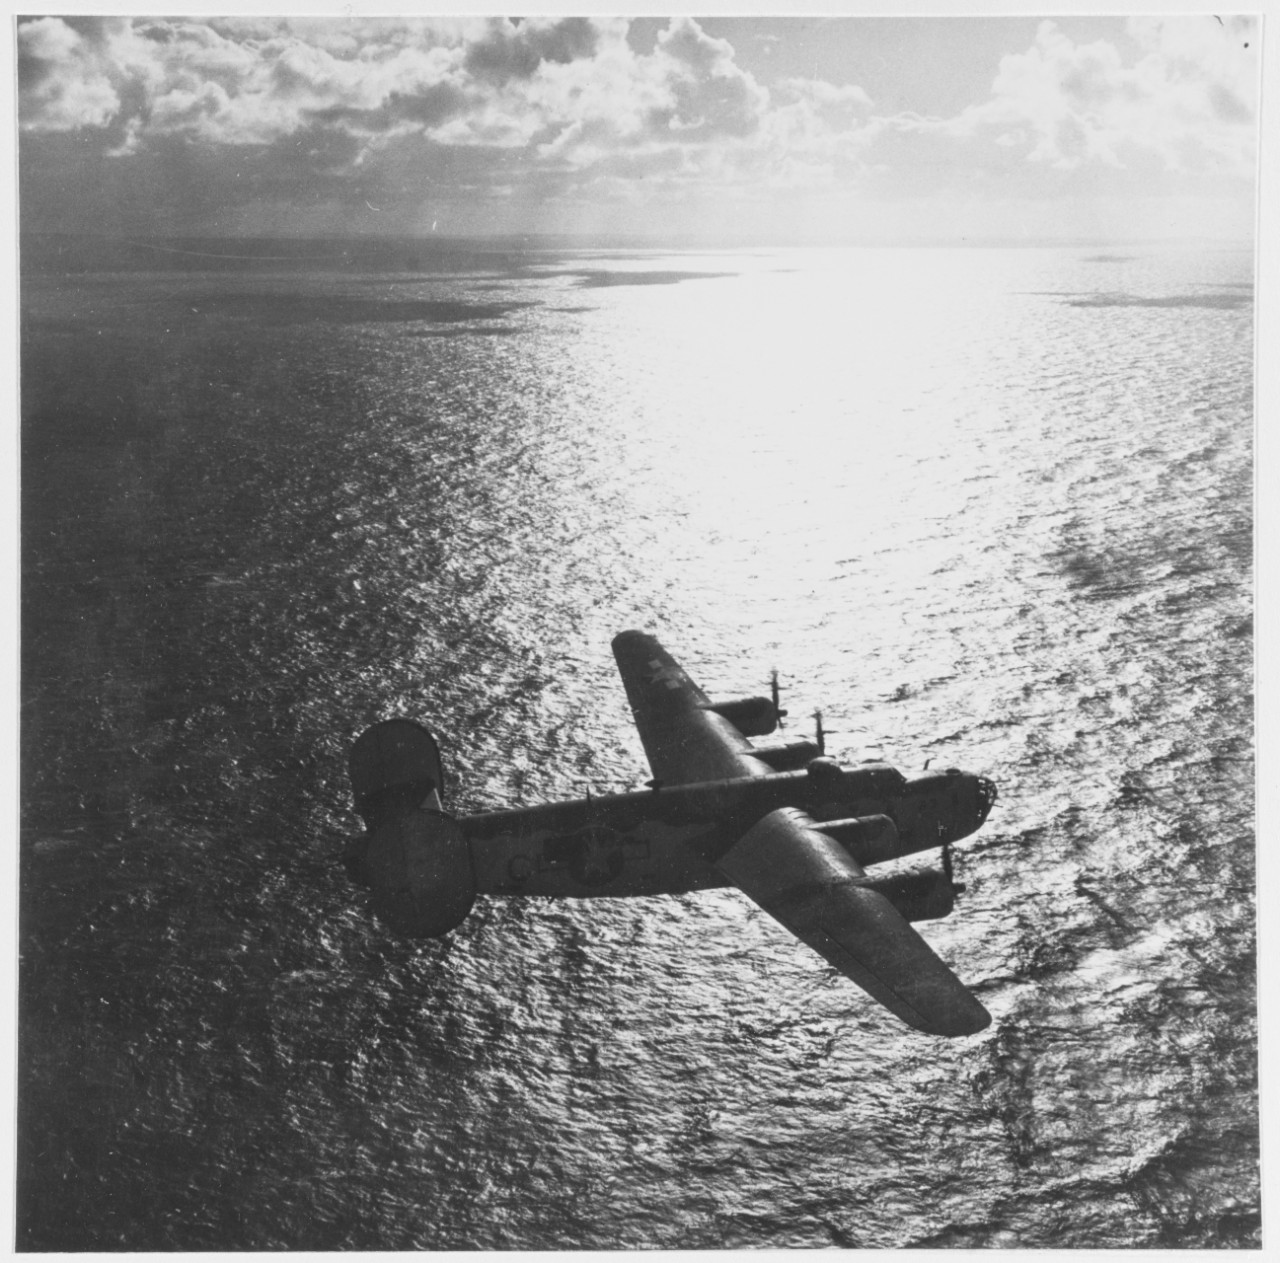 Consolidated PB4Y-1 patrol bomber